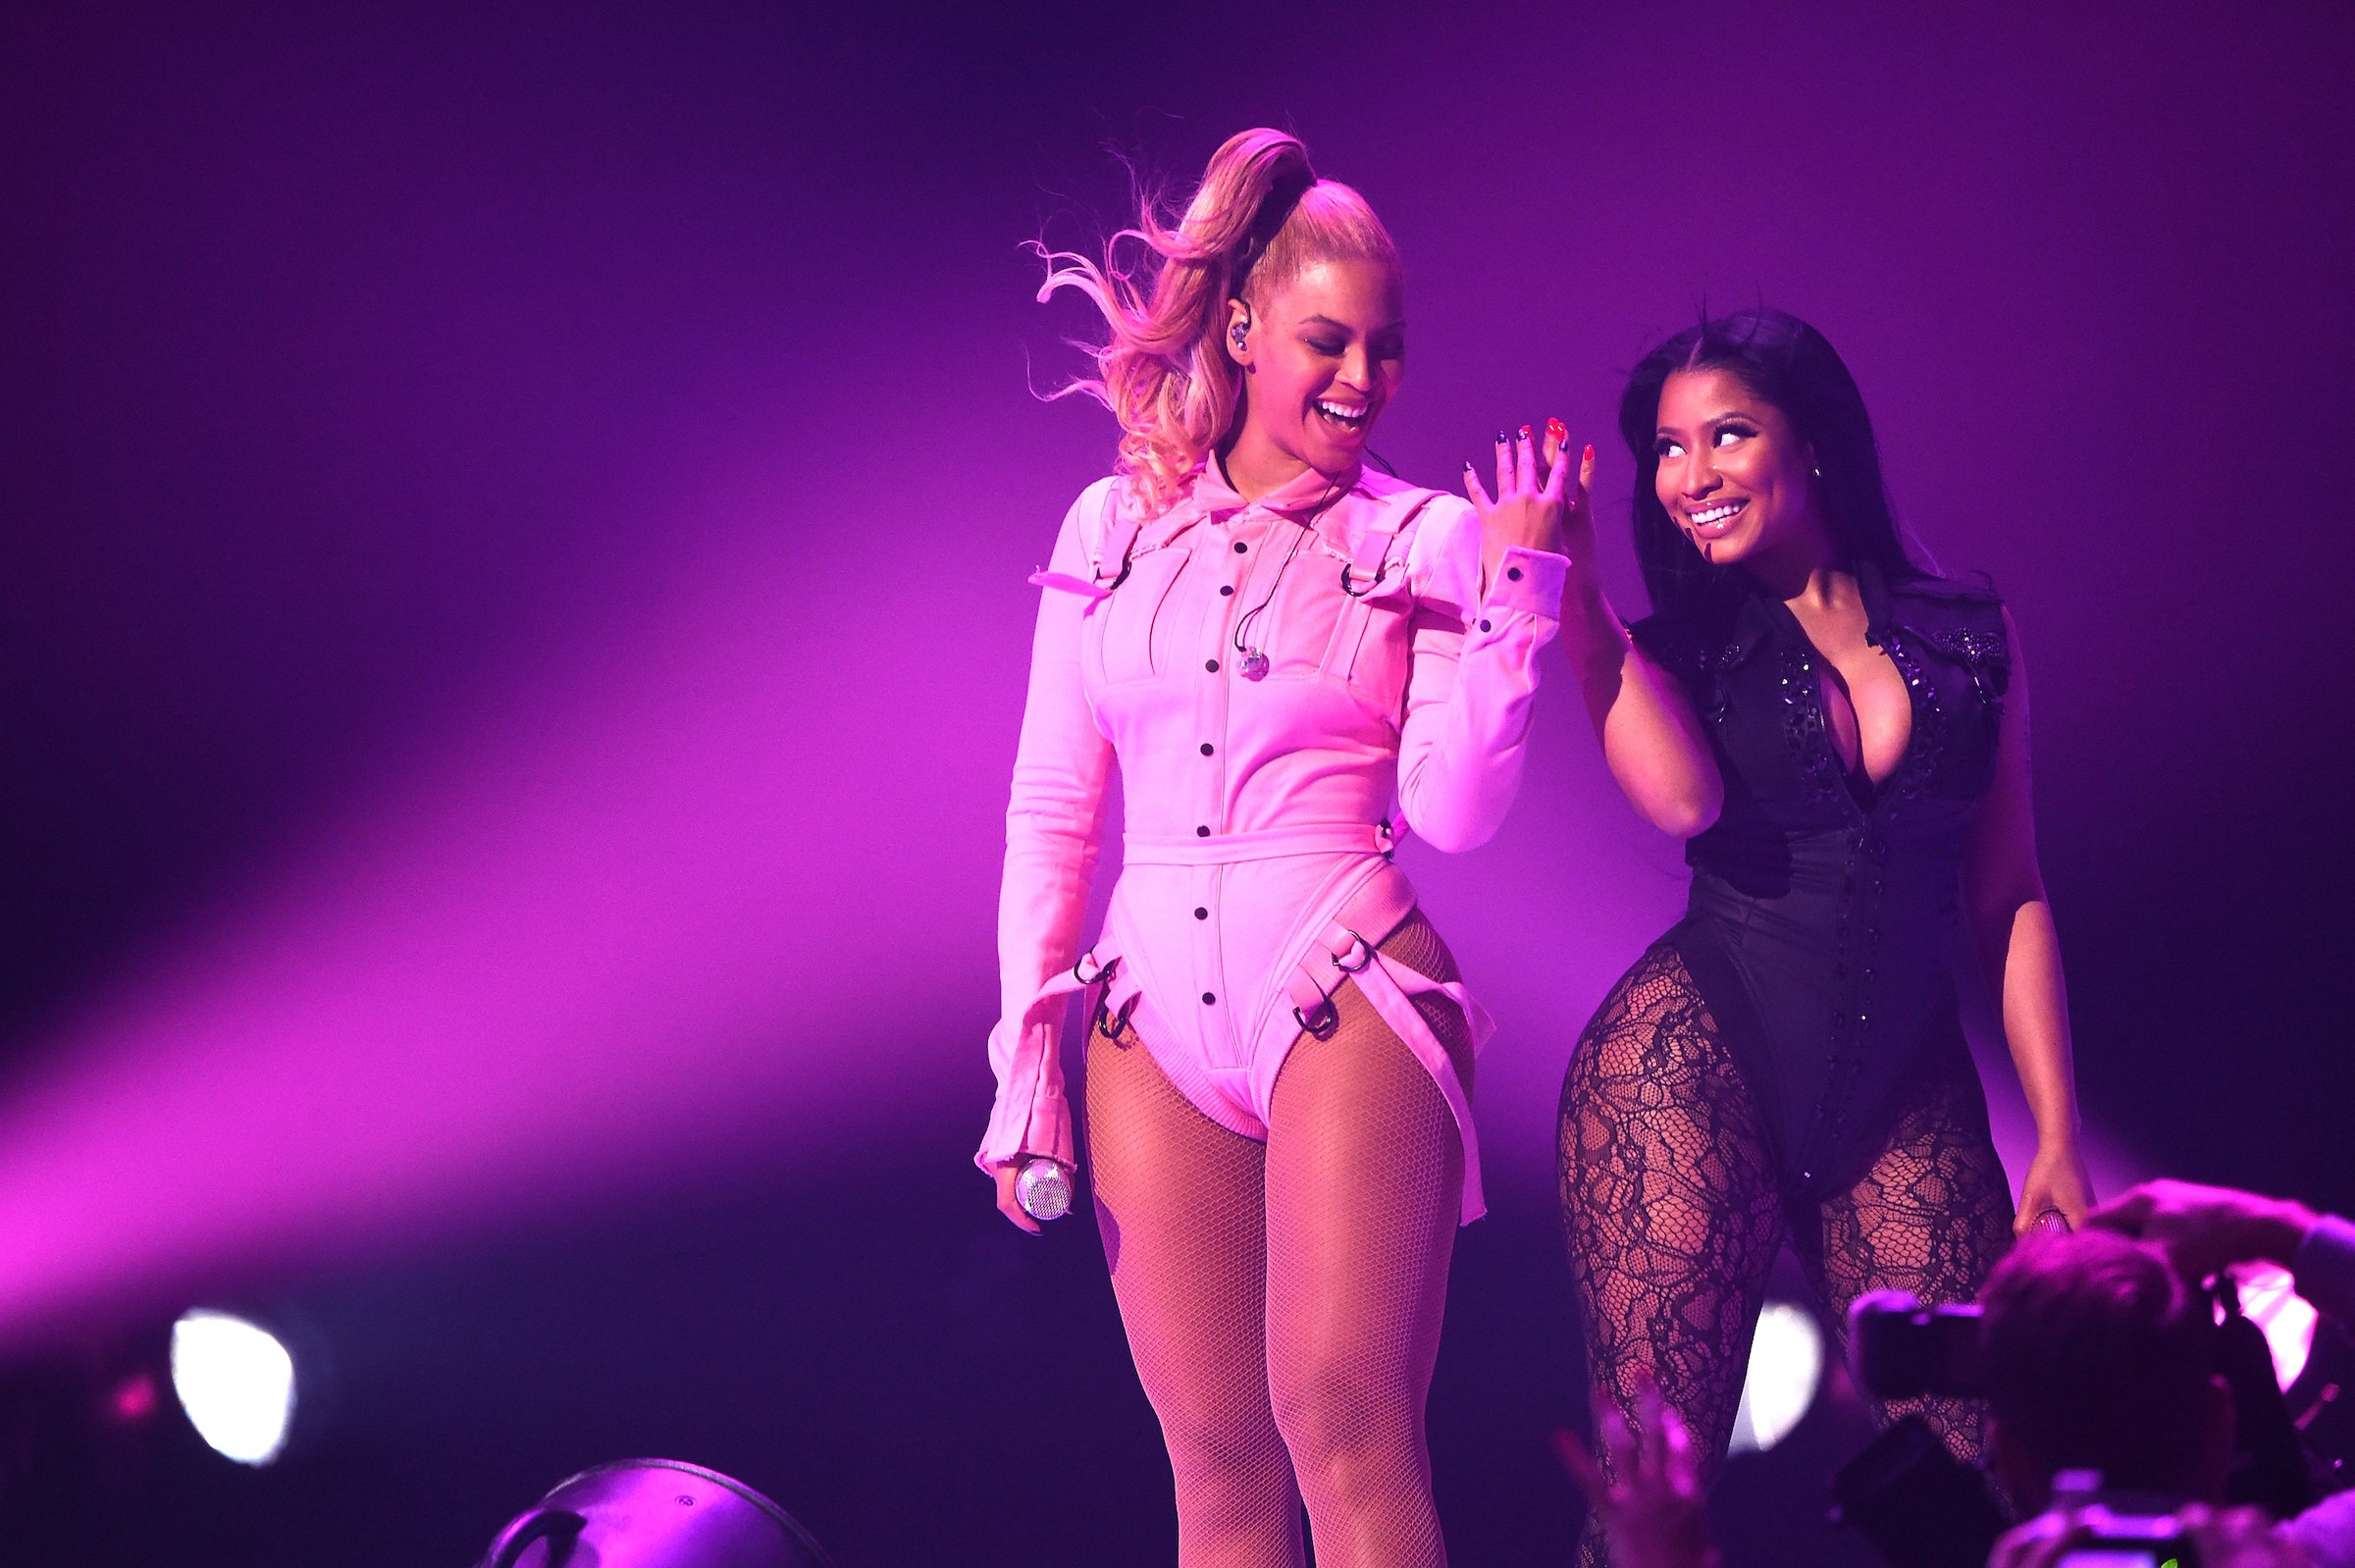 Beyoncé and Nicki Minaj performing together